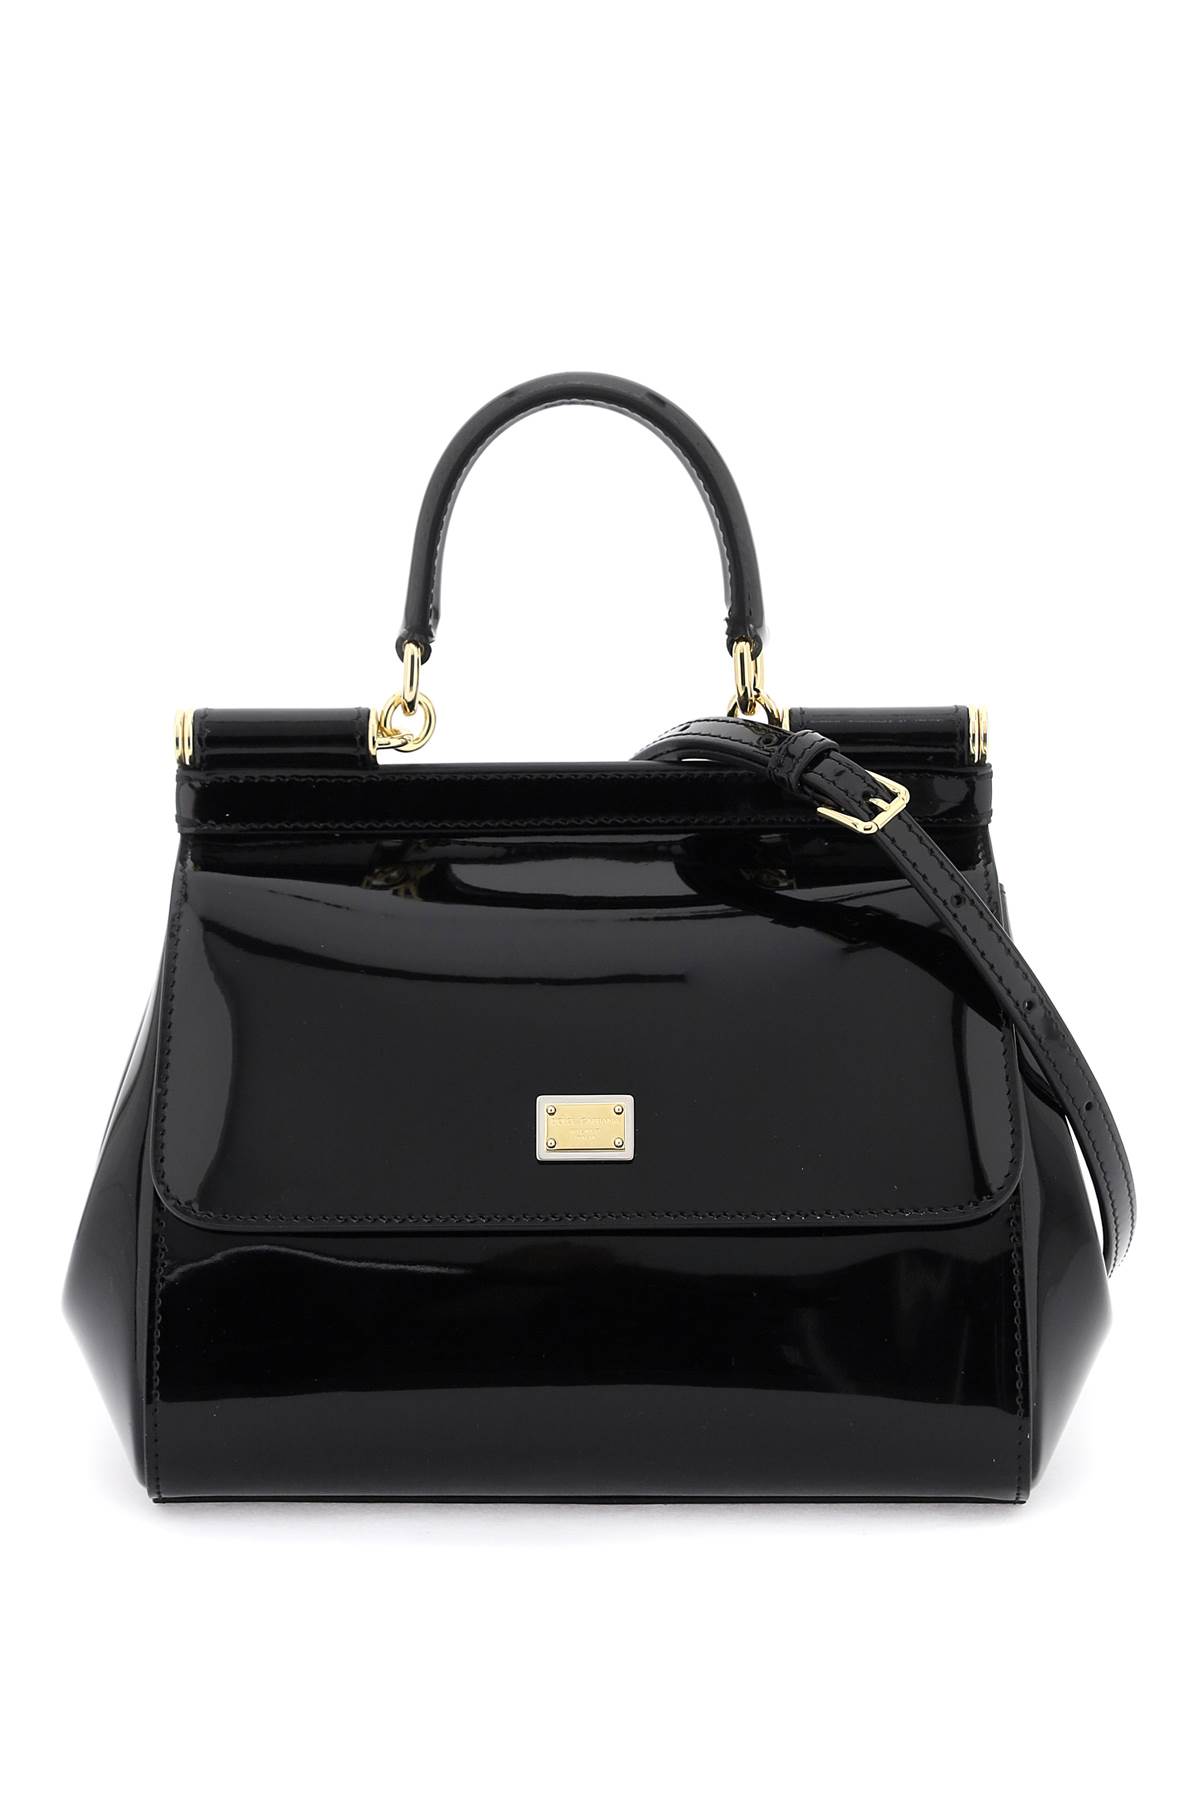 Dolce & Gabbana Patent Leather Sicily Handbag In Nero (black)